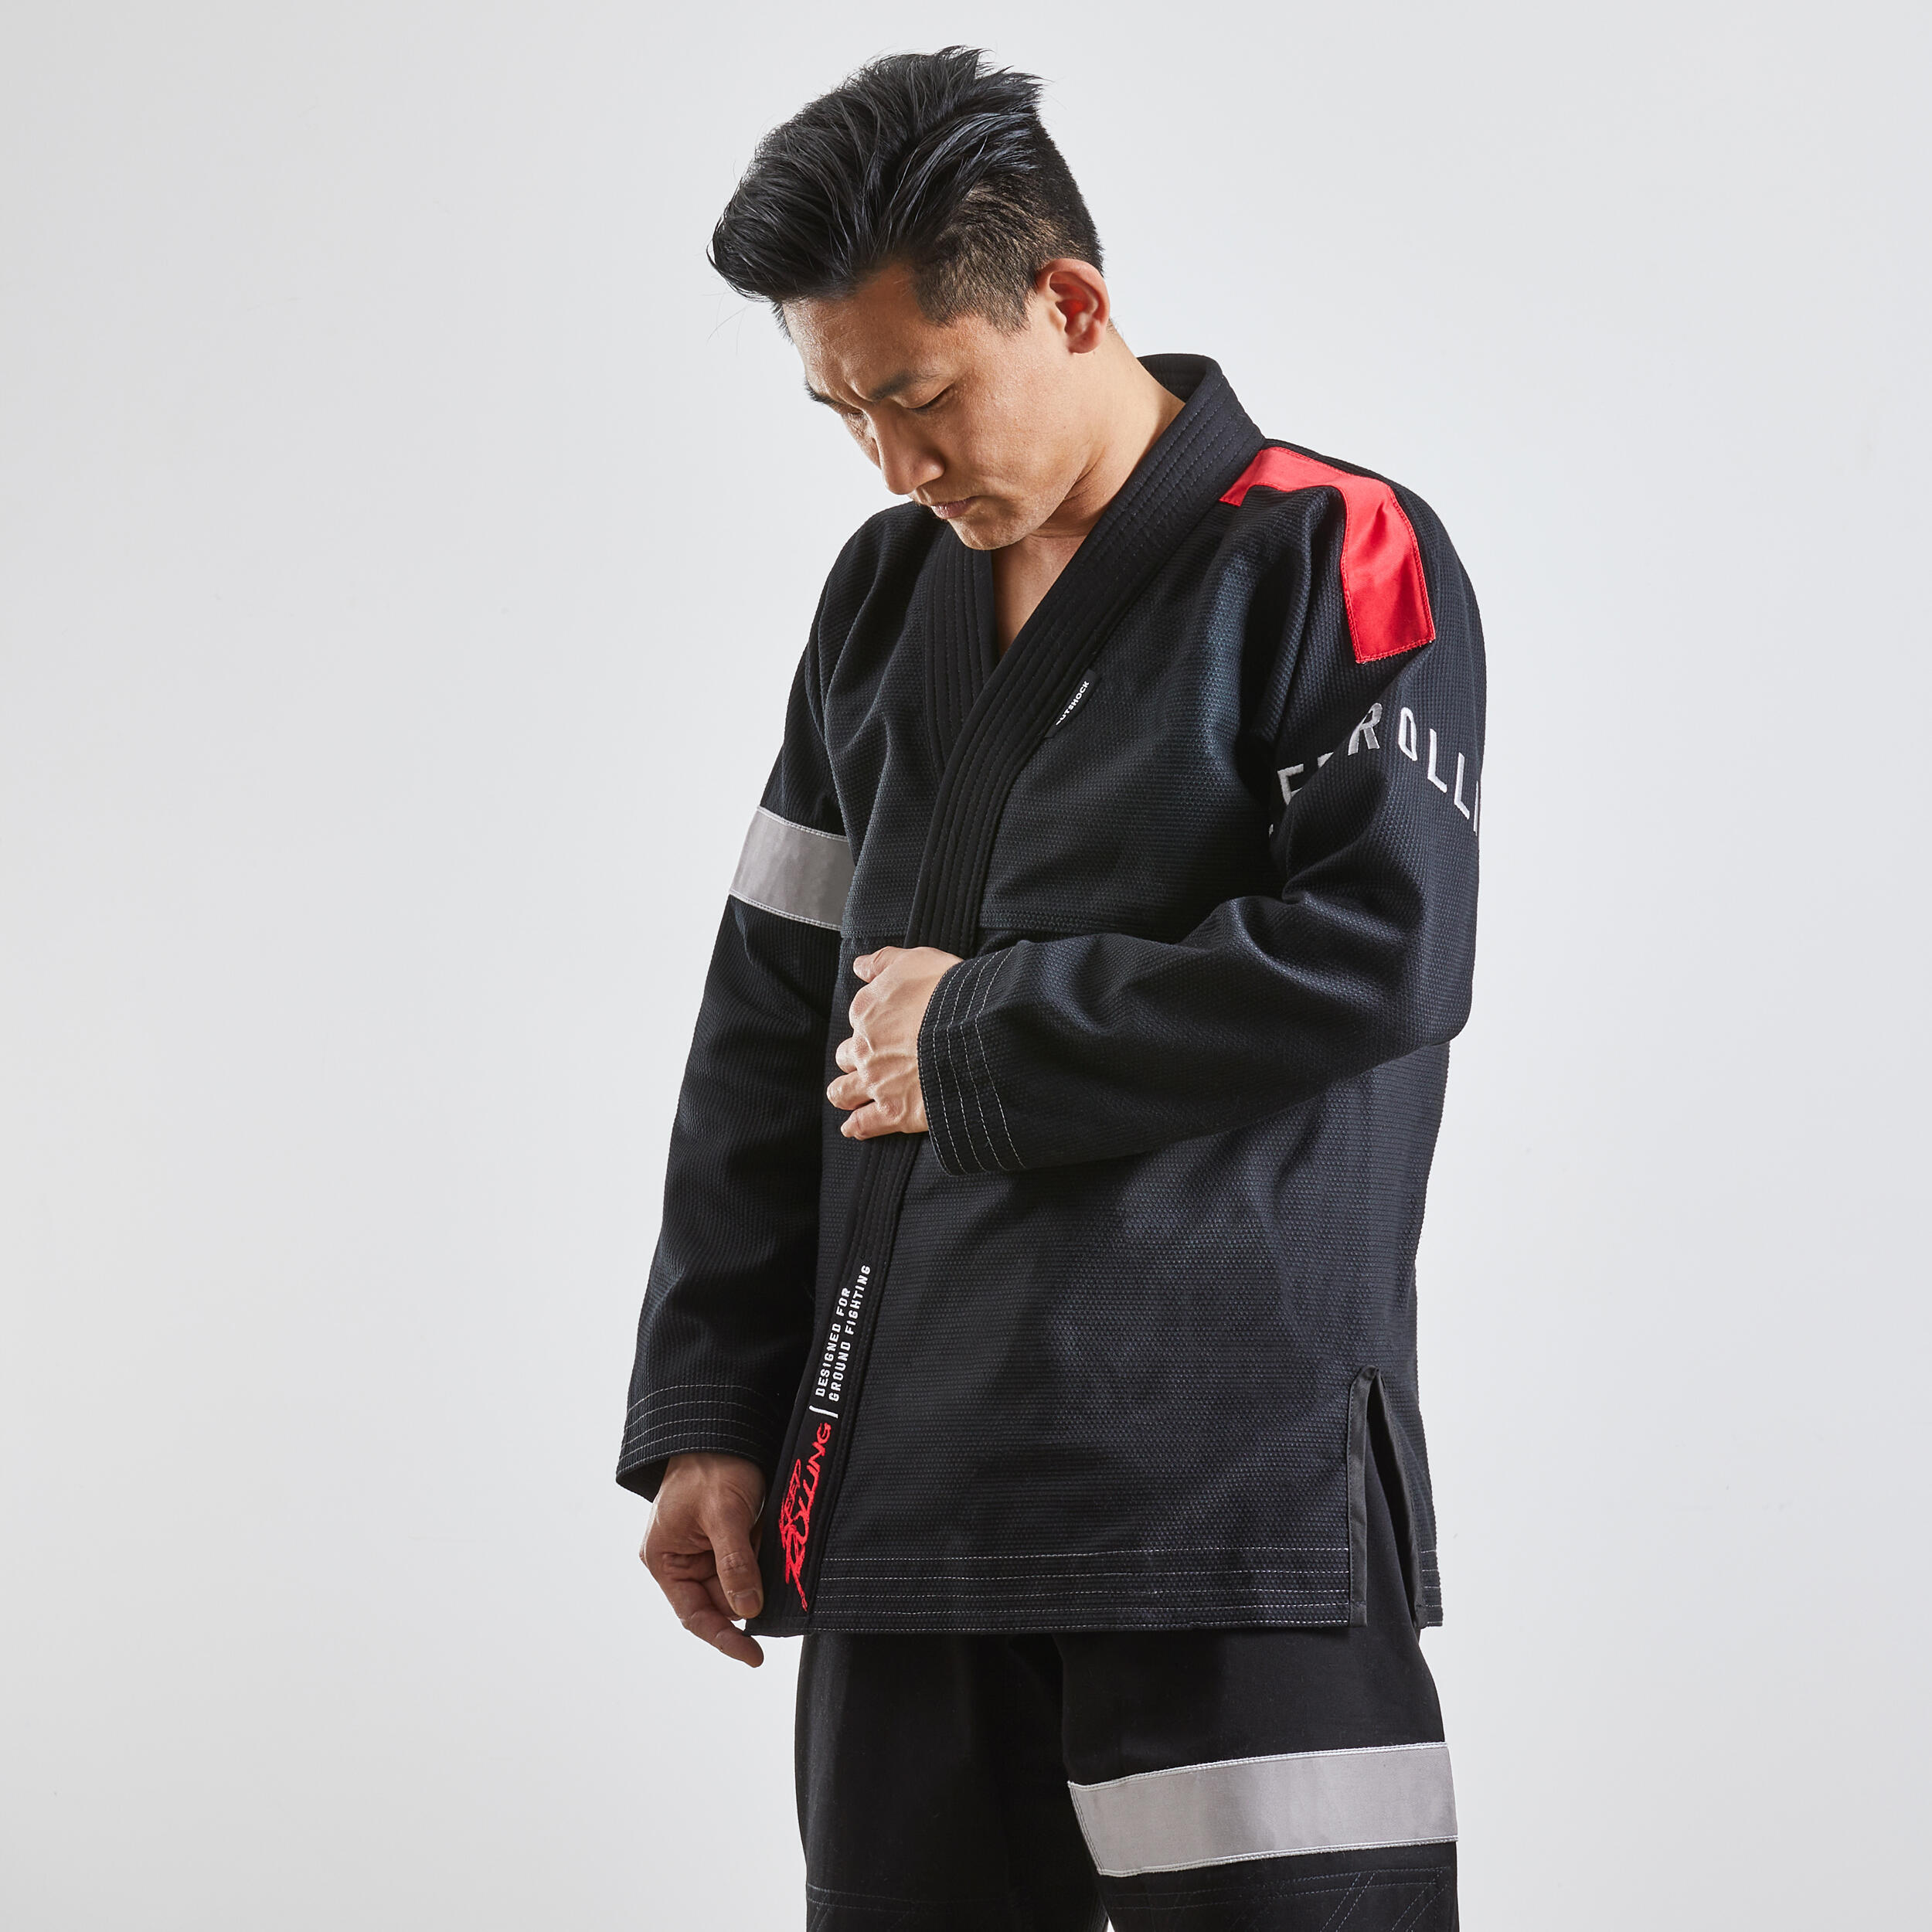 500 Brazilian Jiu-Jitsu Adult Uniform - Black 5/9